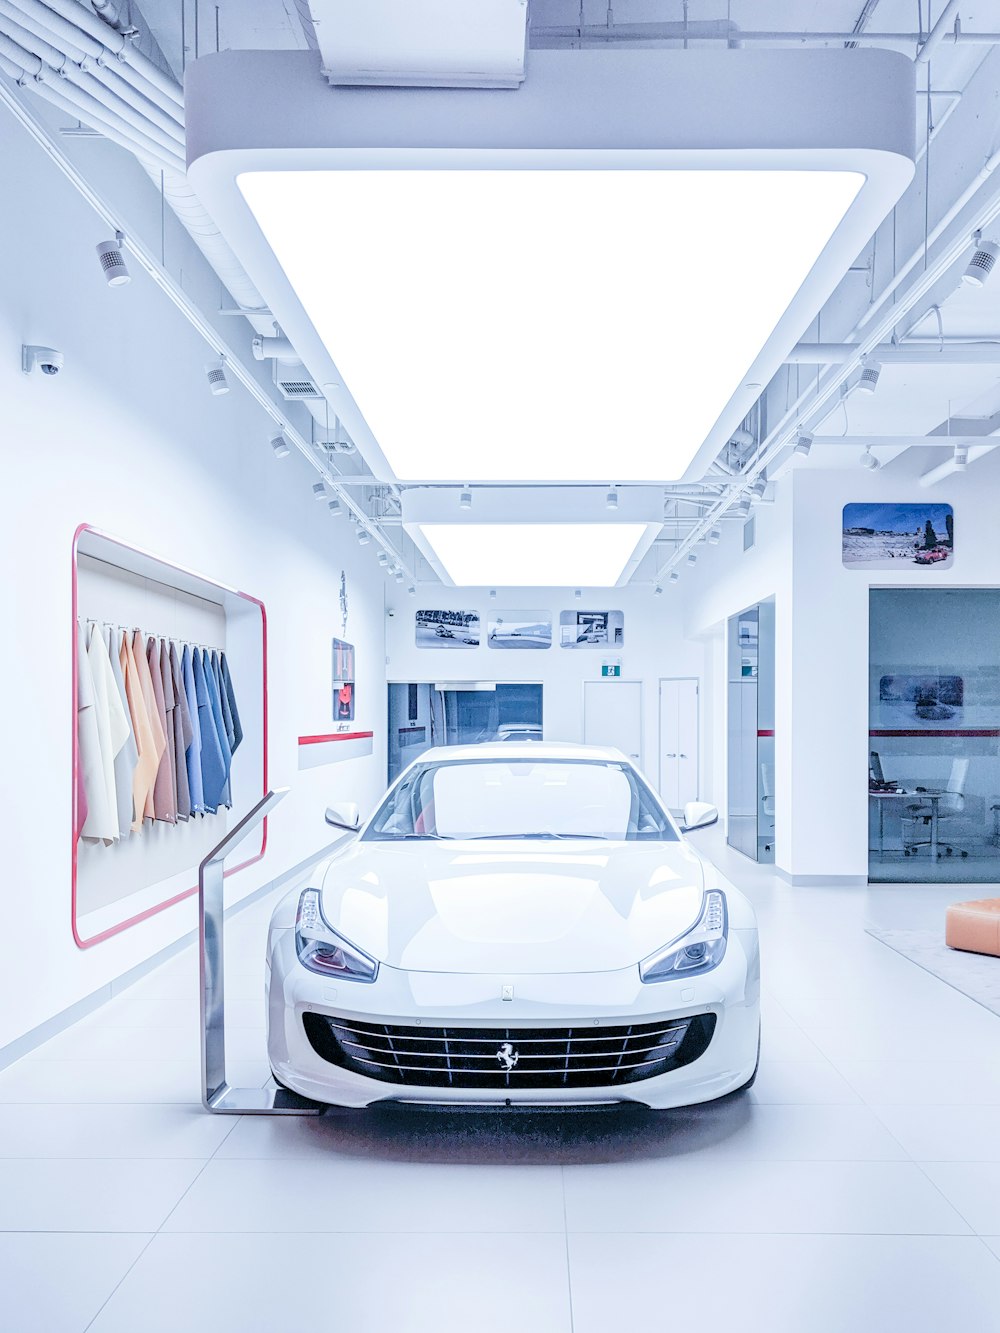 Ferrari blanco dentro de un edificio blanco con ropa colgada